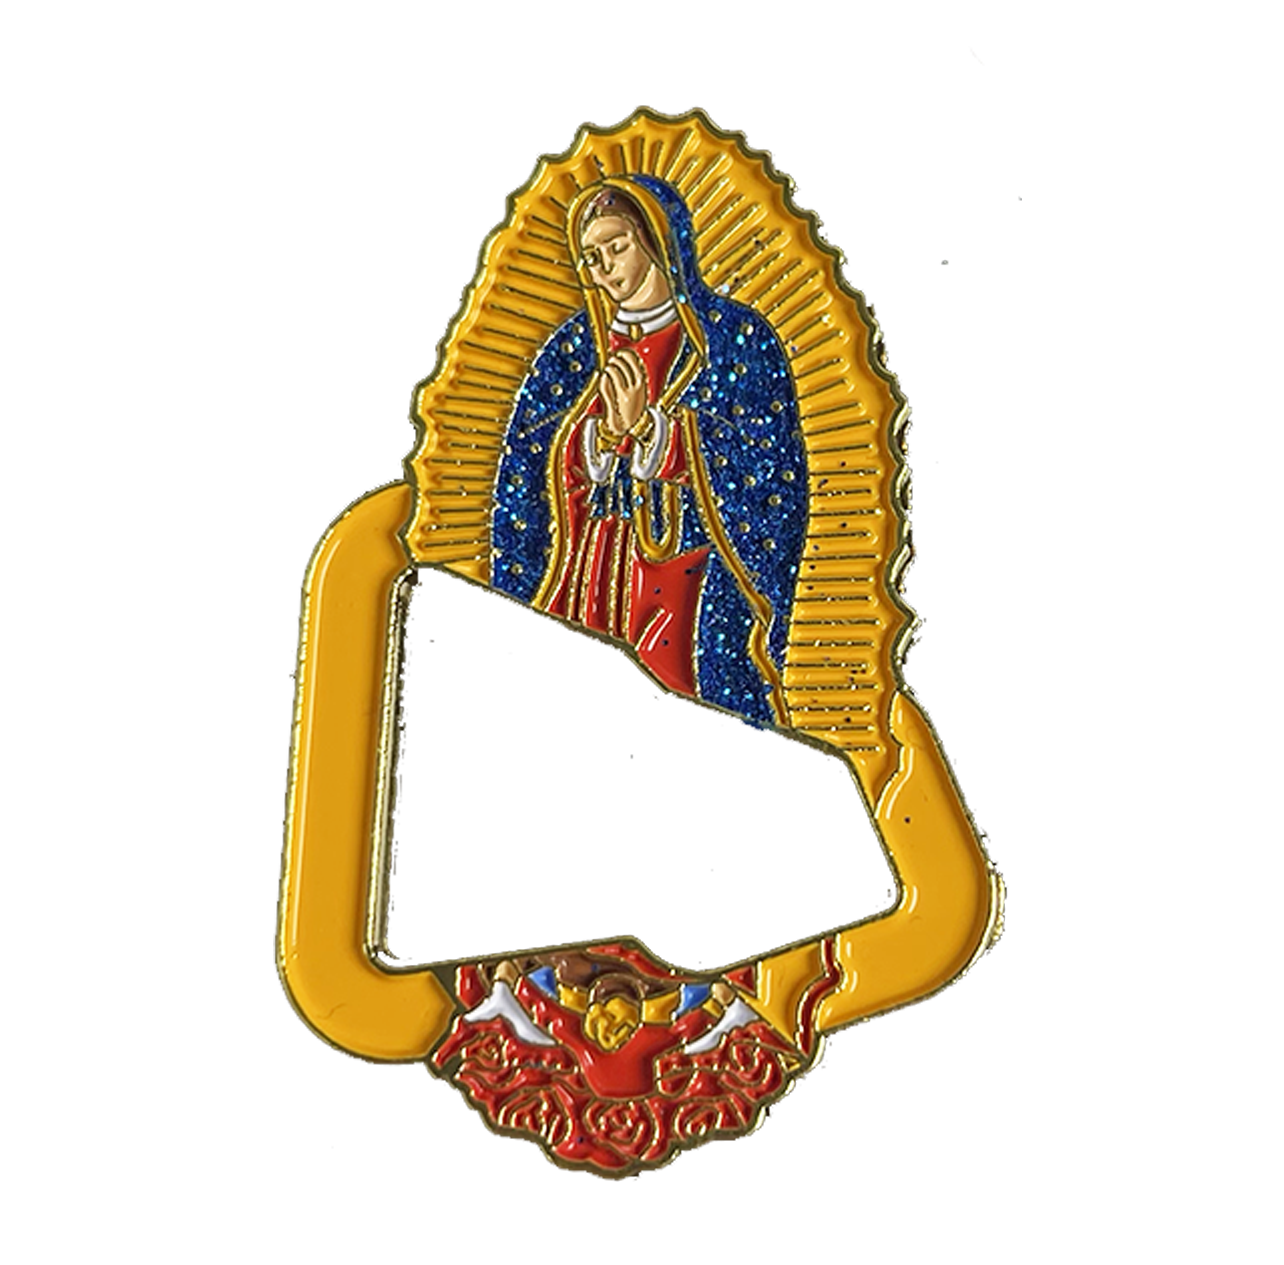 Virgin Mary Pin